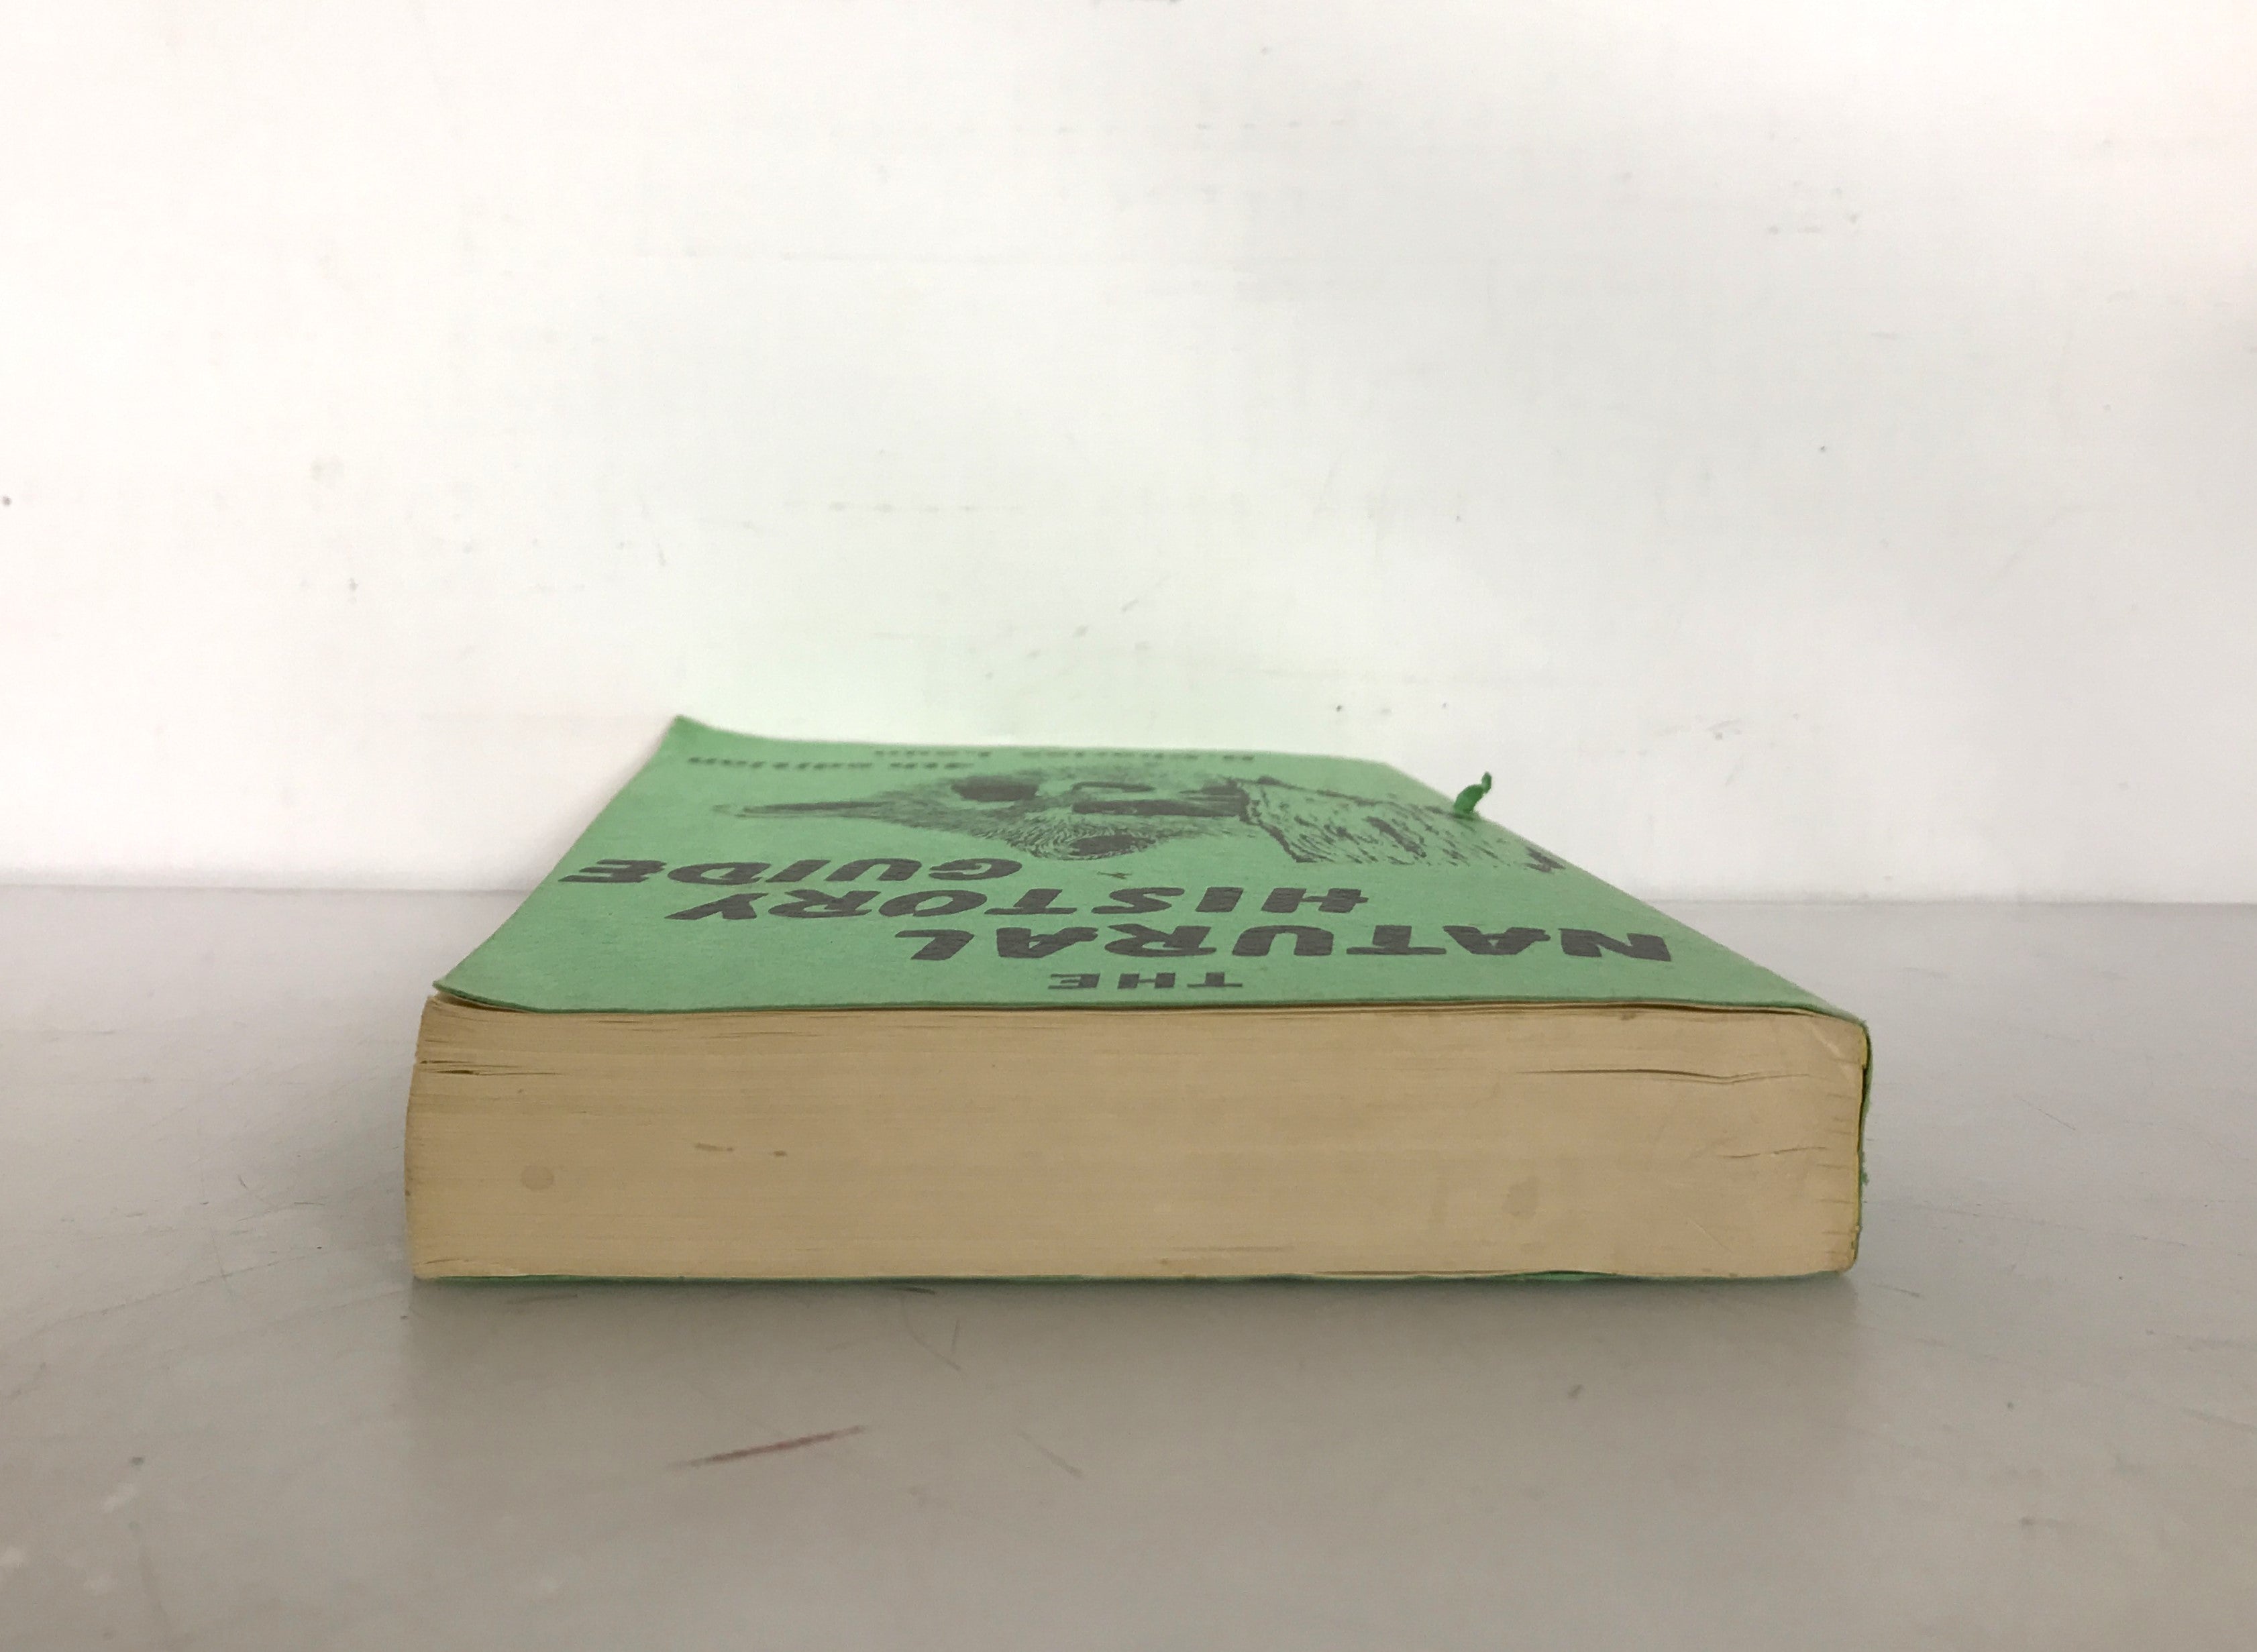 Beginner's Guide to Wild Flowers 4th Impression Ethel Hinckley Hausman 1948 SC